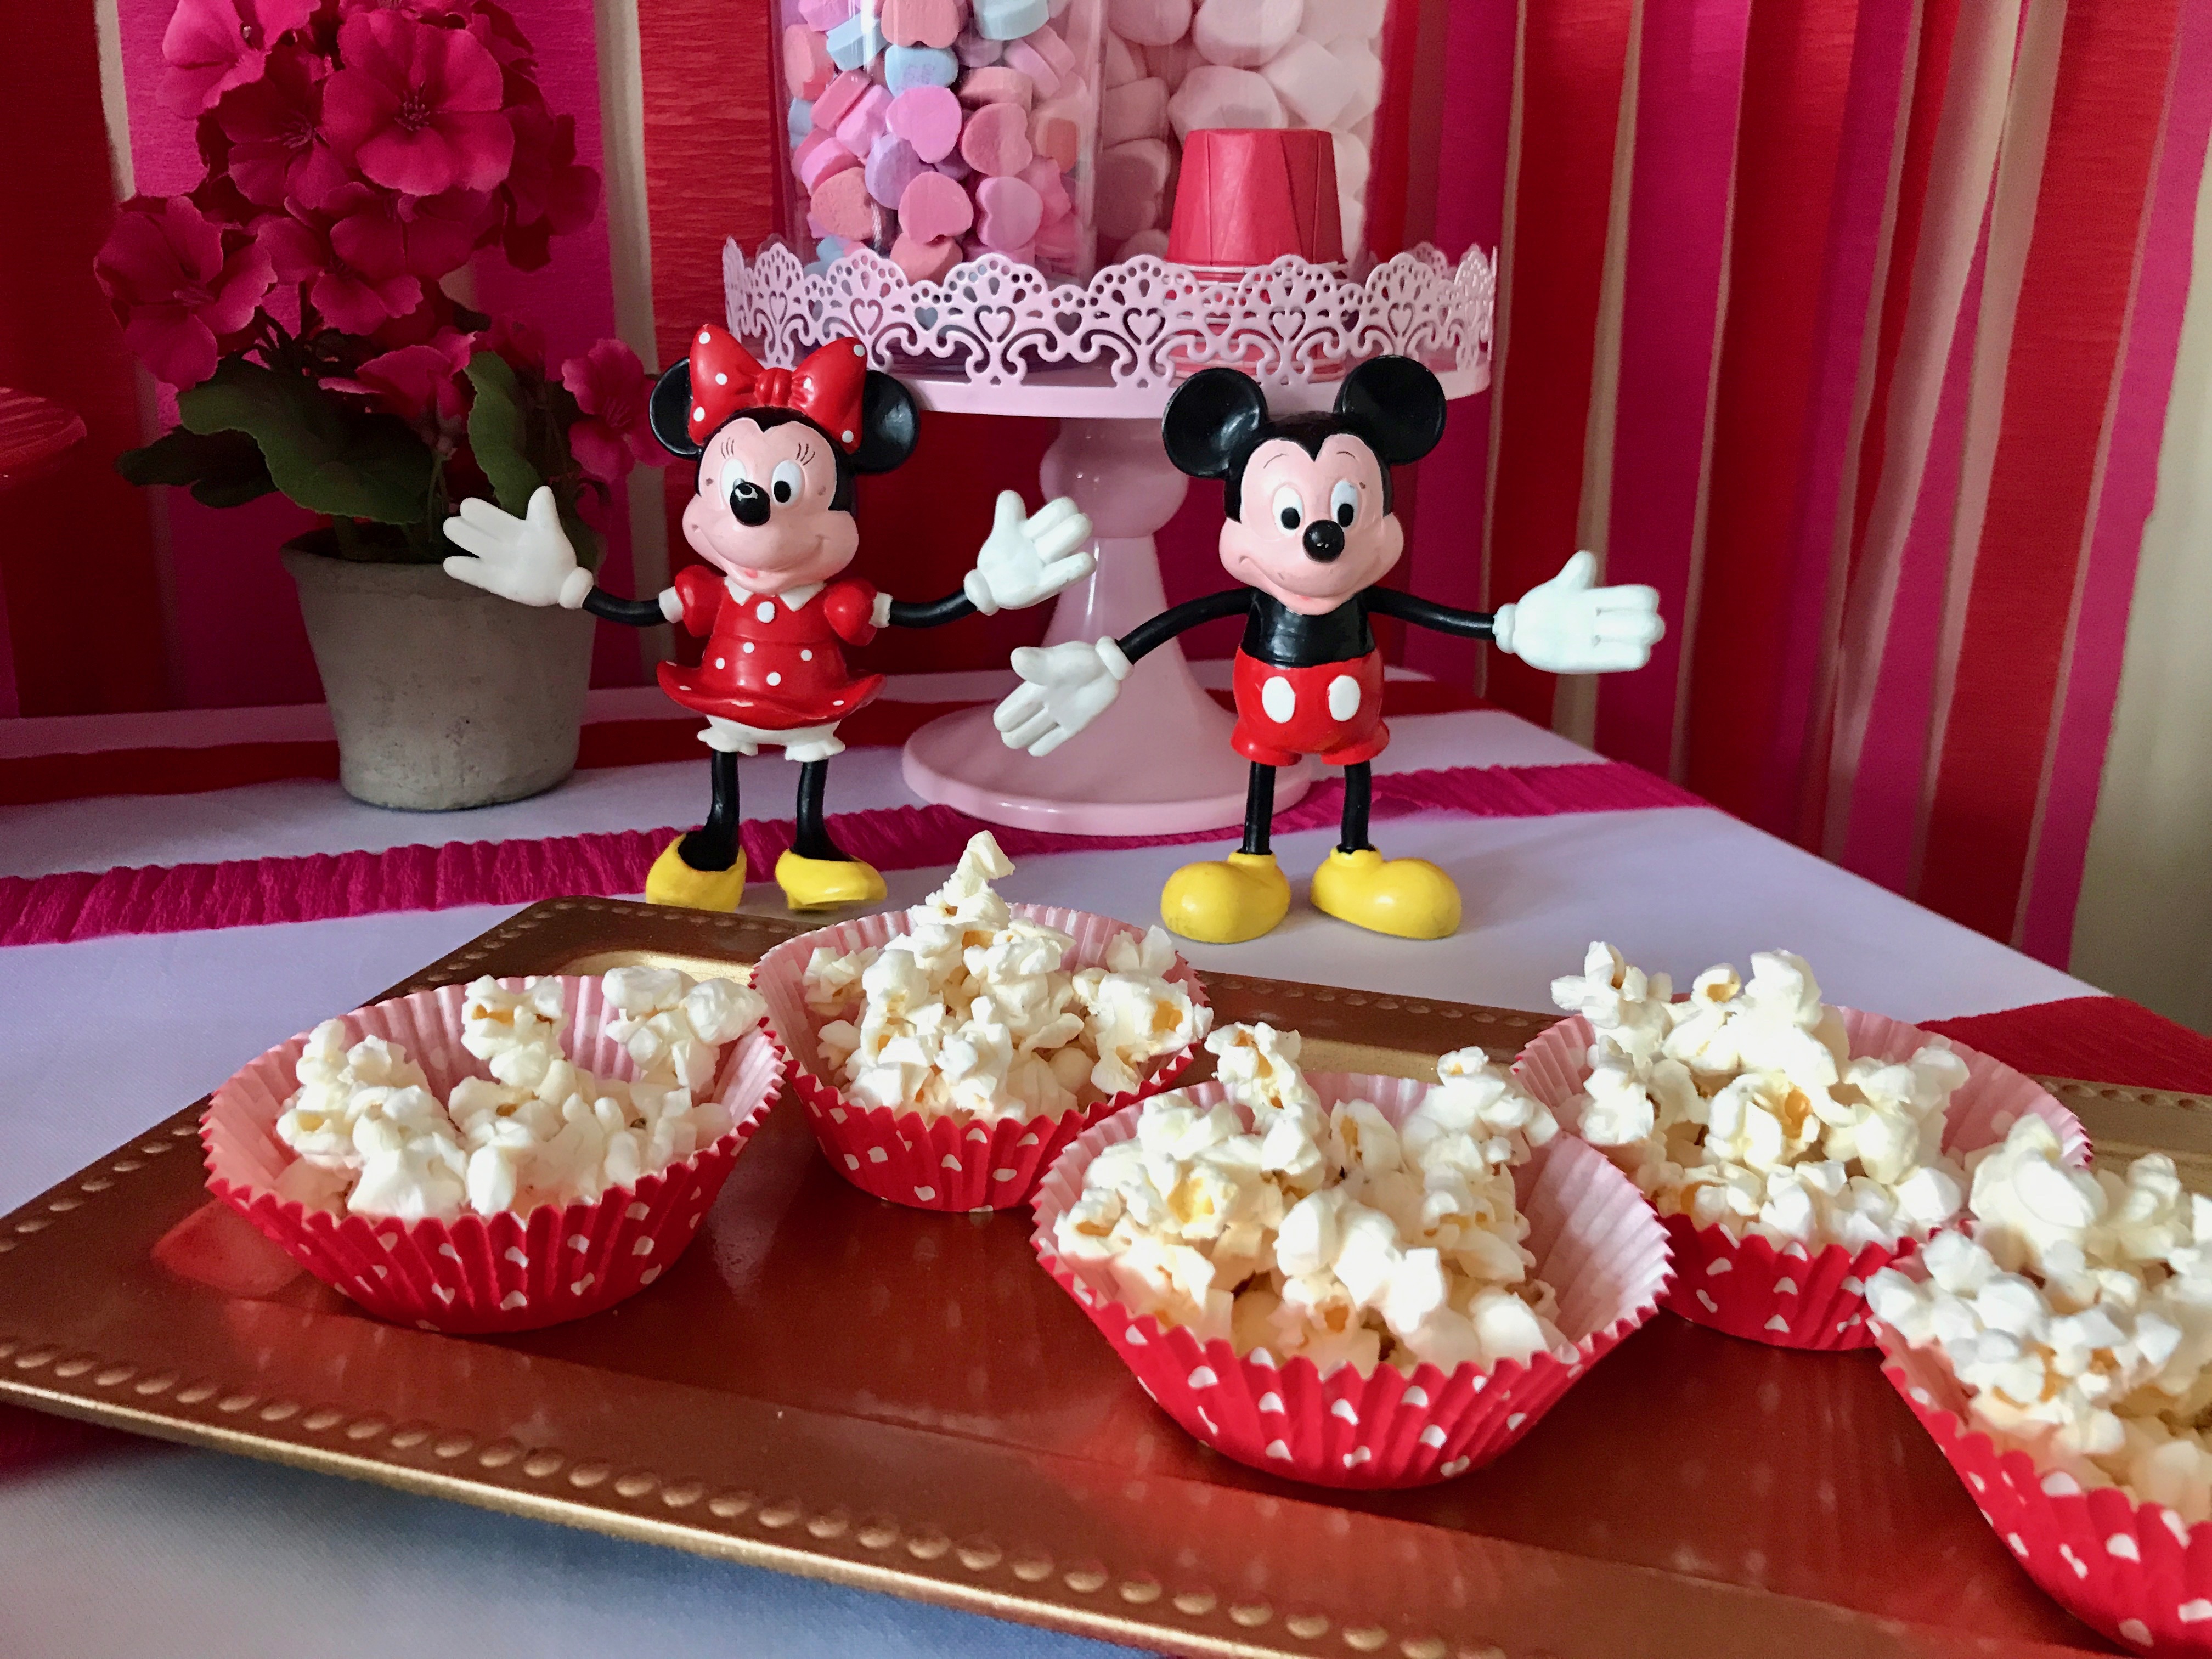 Minnie Mouse Valentine's Day Party Ideas via 11cupcakes #MinnieMouse #MinnieValentine #Valentinesparty